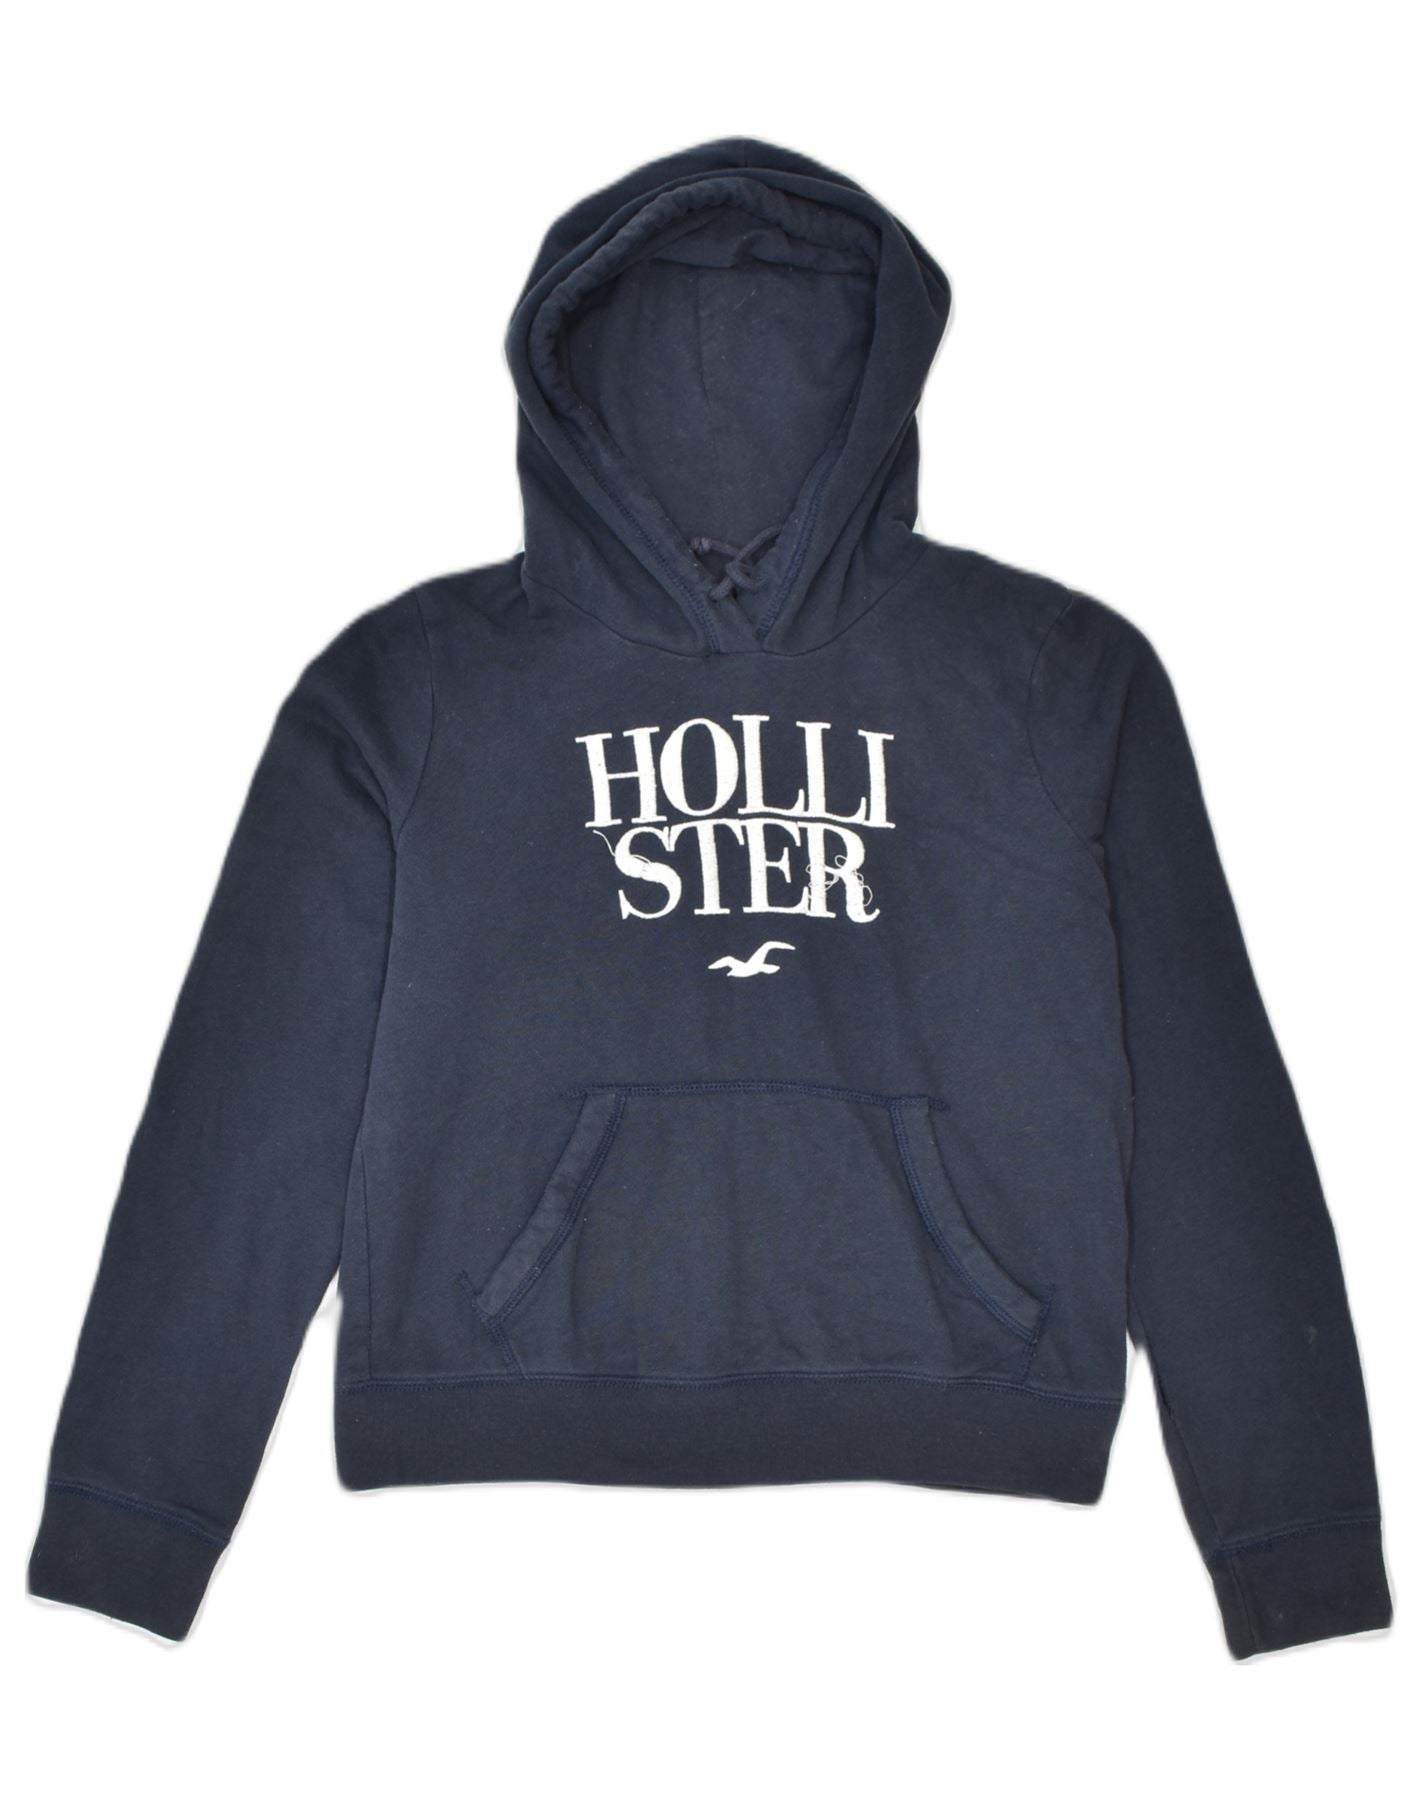 hollister women's oversized retro graphic hoodie DARK GREY SIZE S